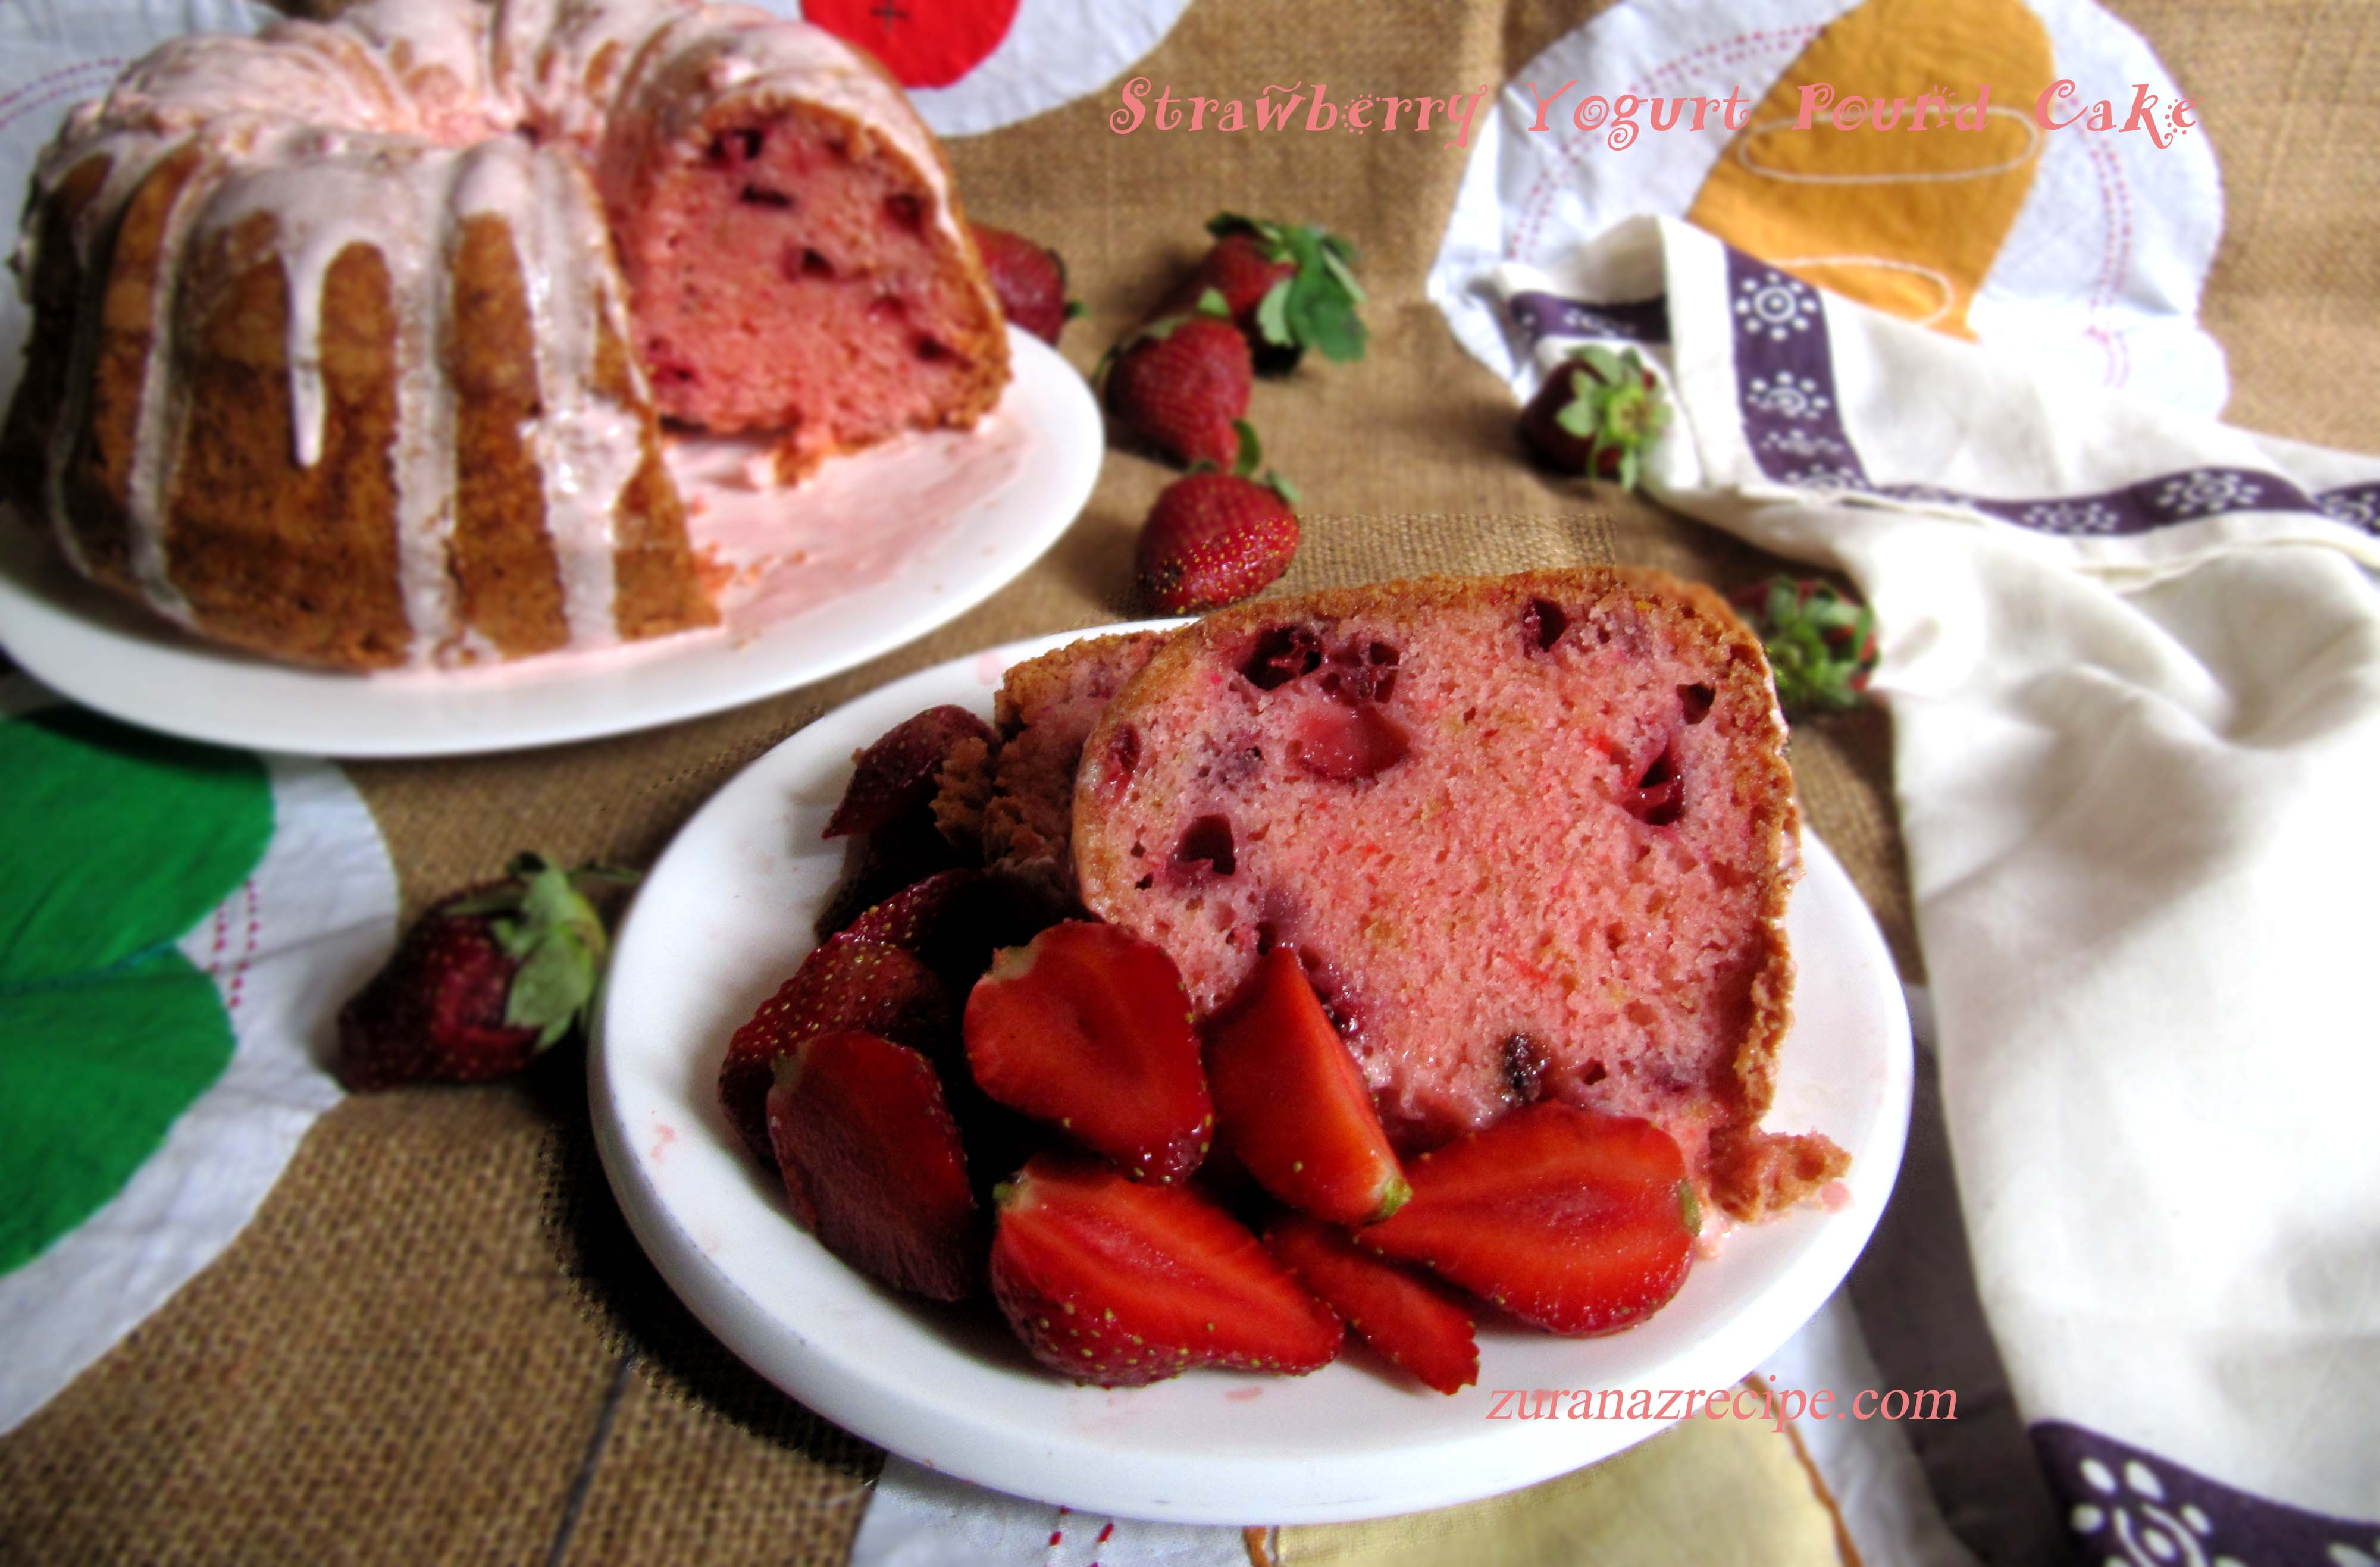 Strawberry Yogurt Pound Cake